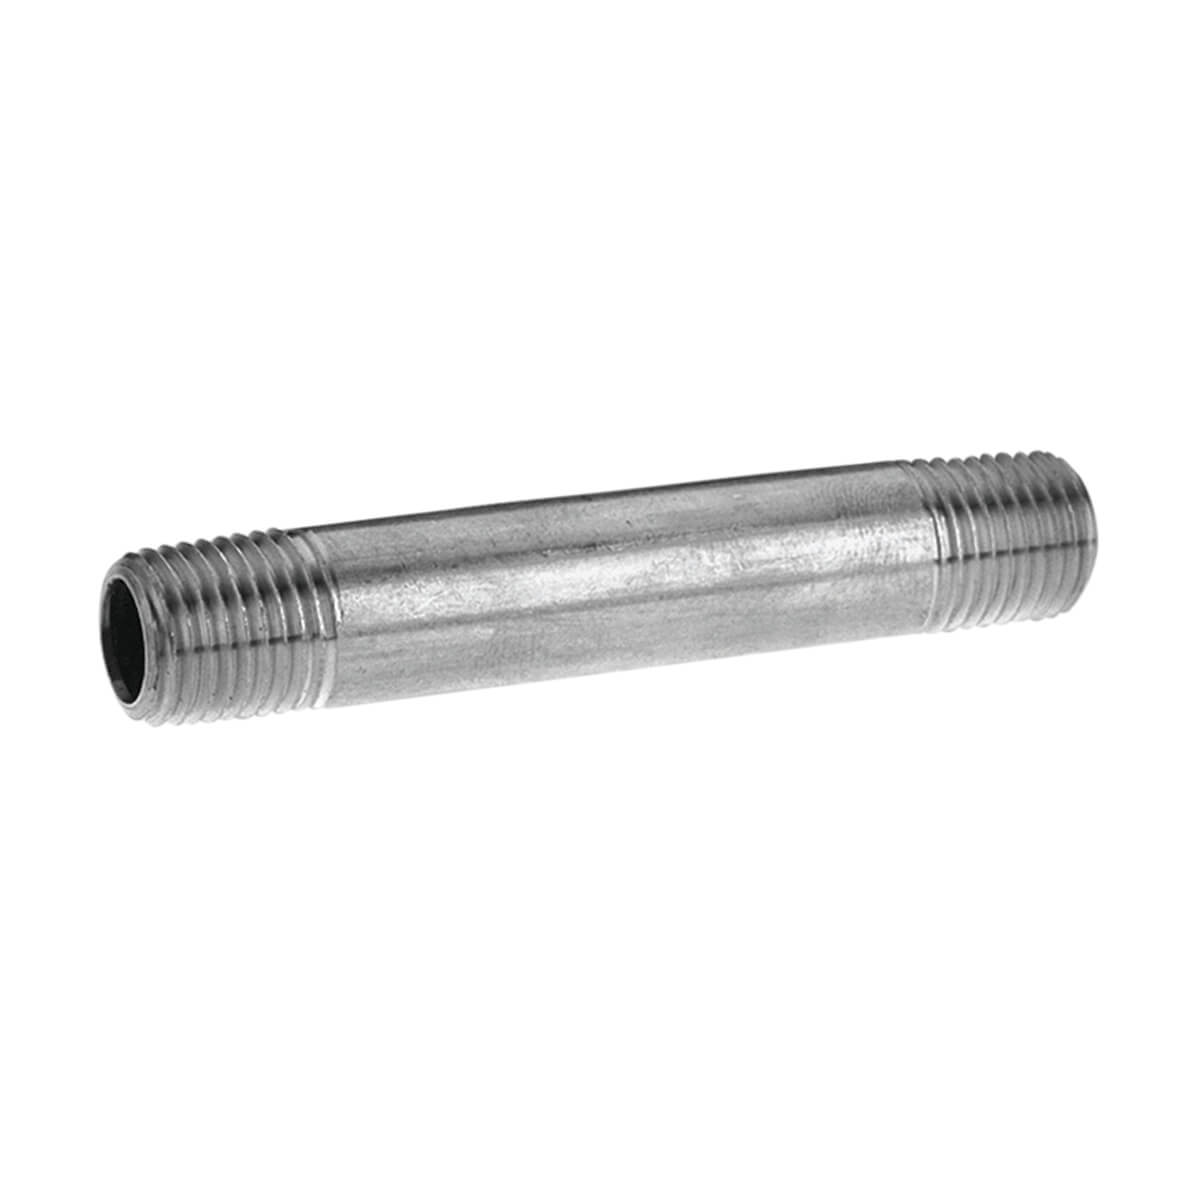 Pipe Nipple Galvanized Steel 1-in x 4-1/2-in